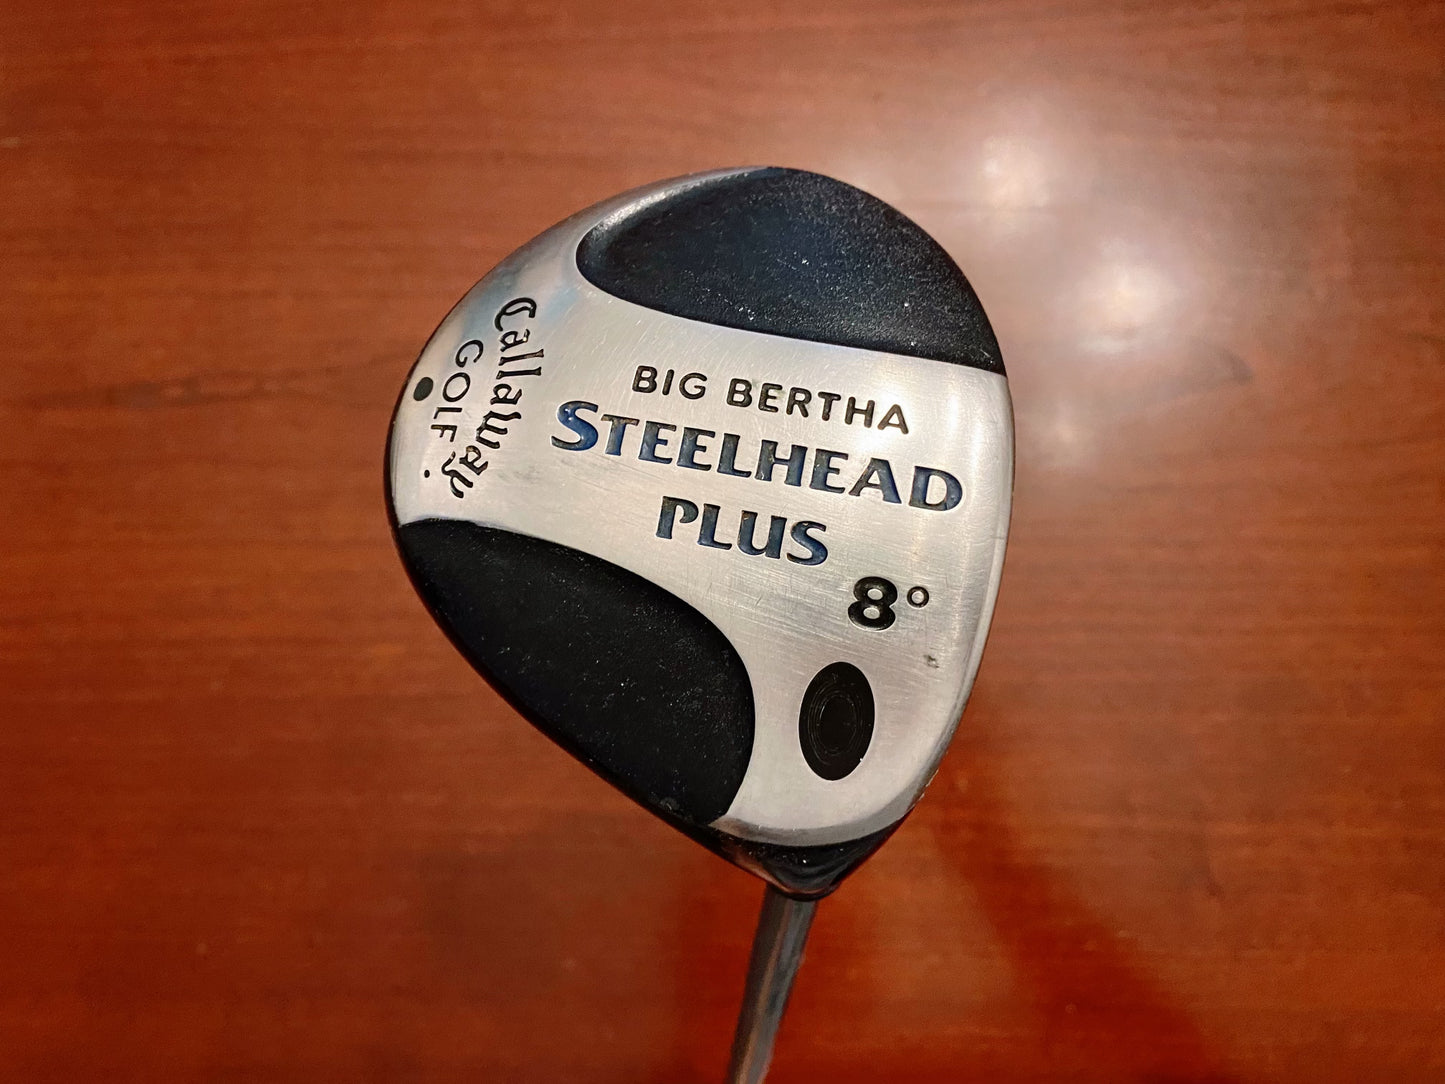 Callaway Big Bertha Steelhead Driver 8* / Strong Flex